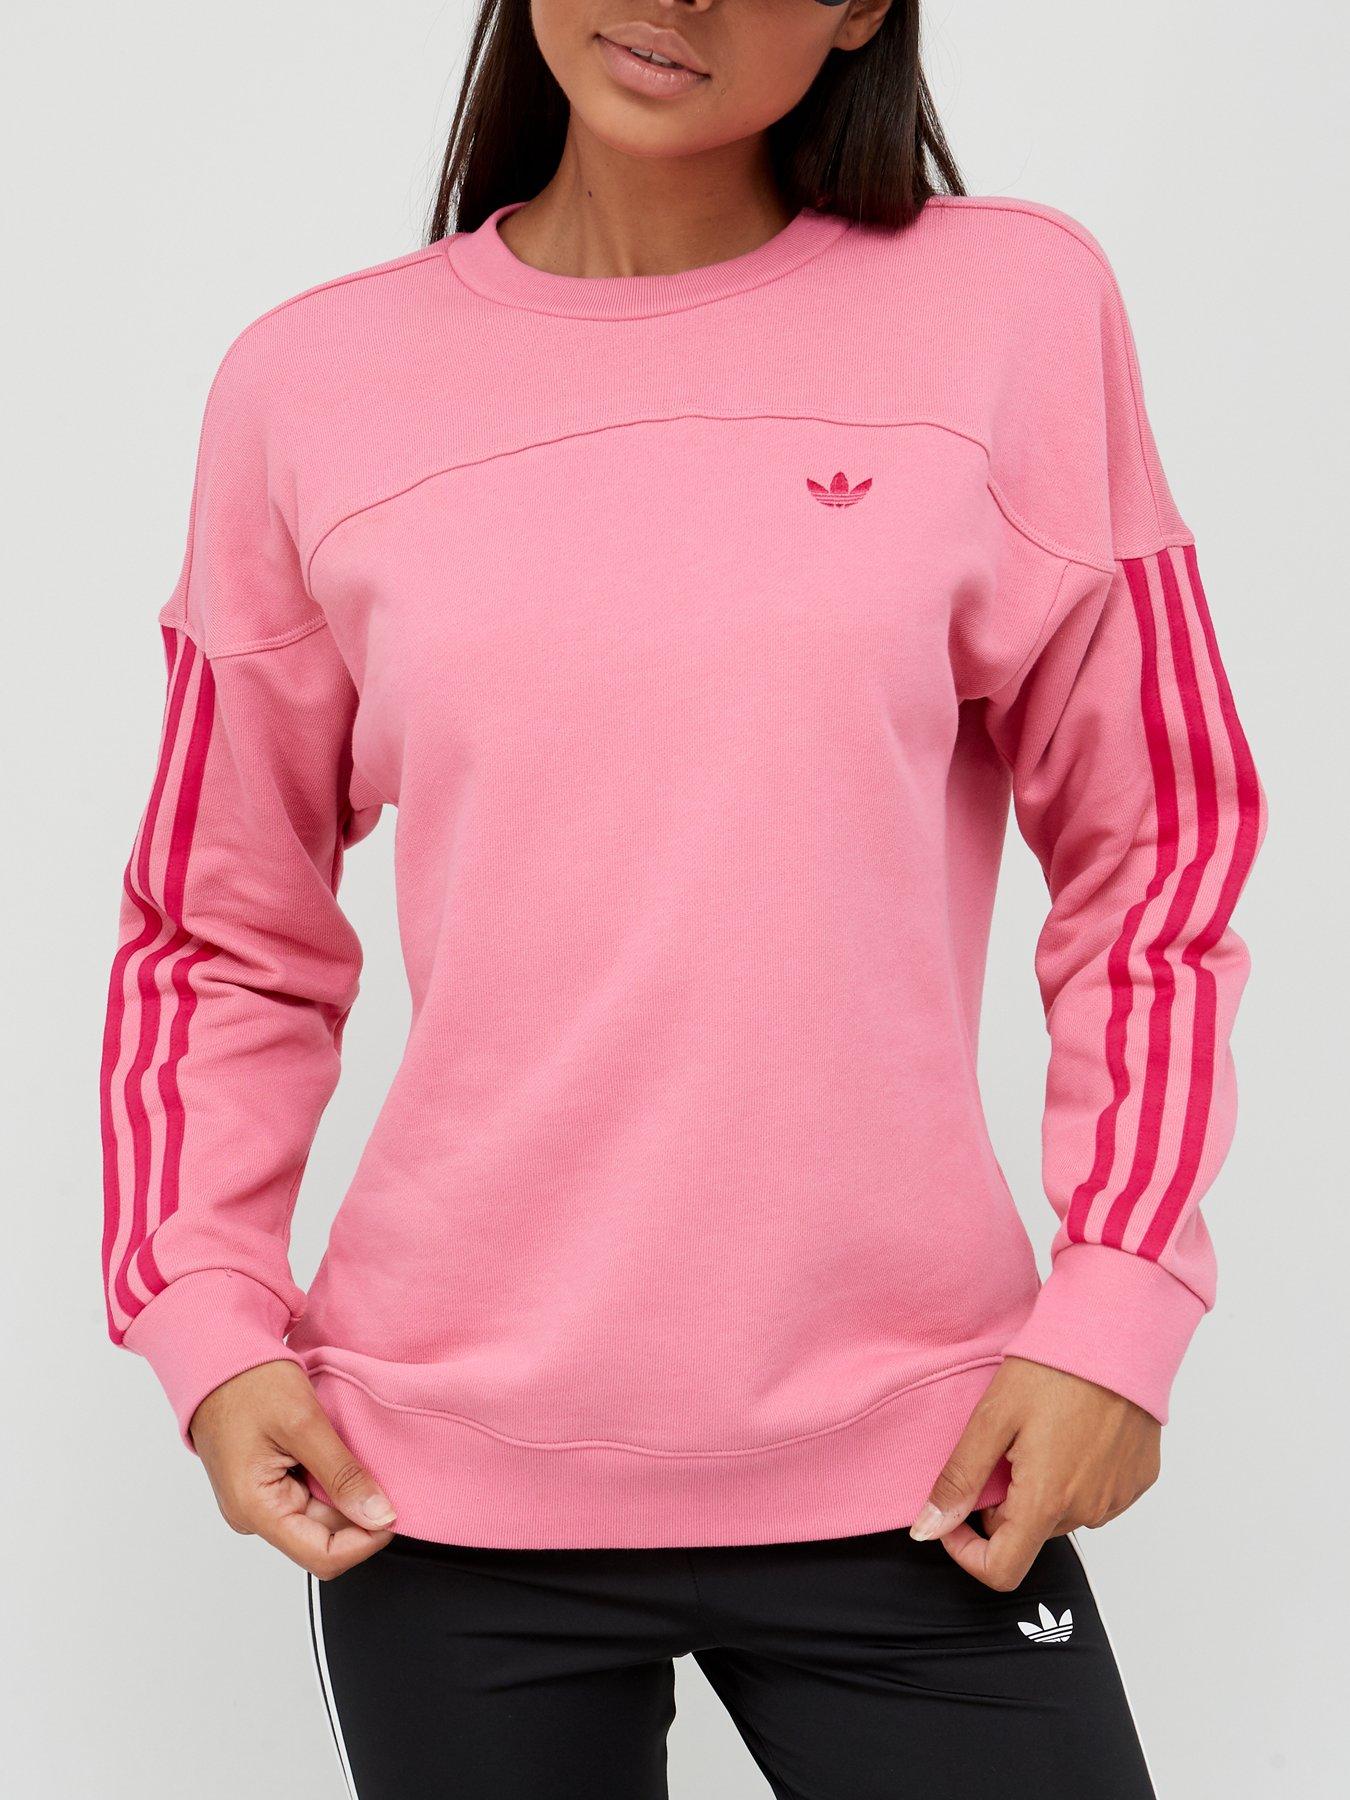  Girl No Filter Sweatshirt - Pink